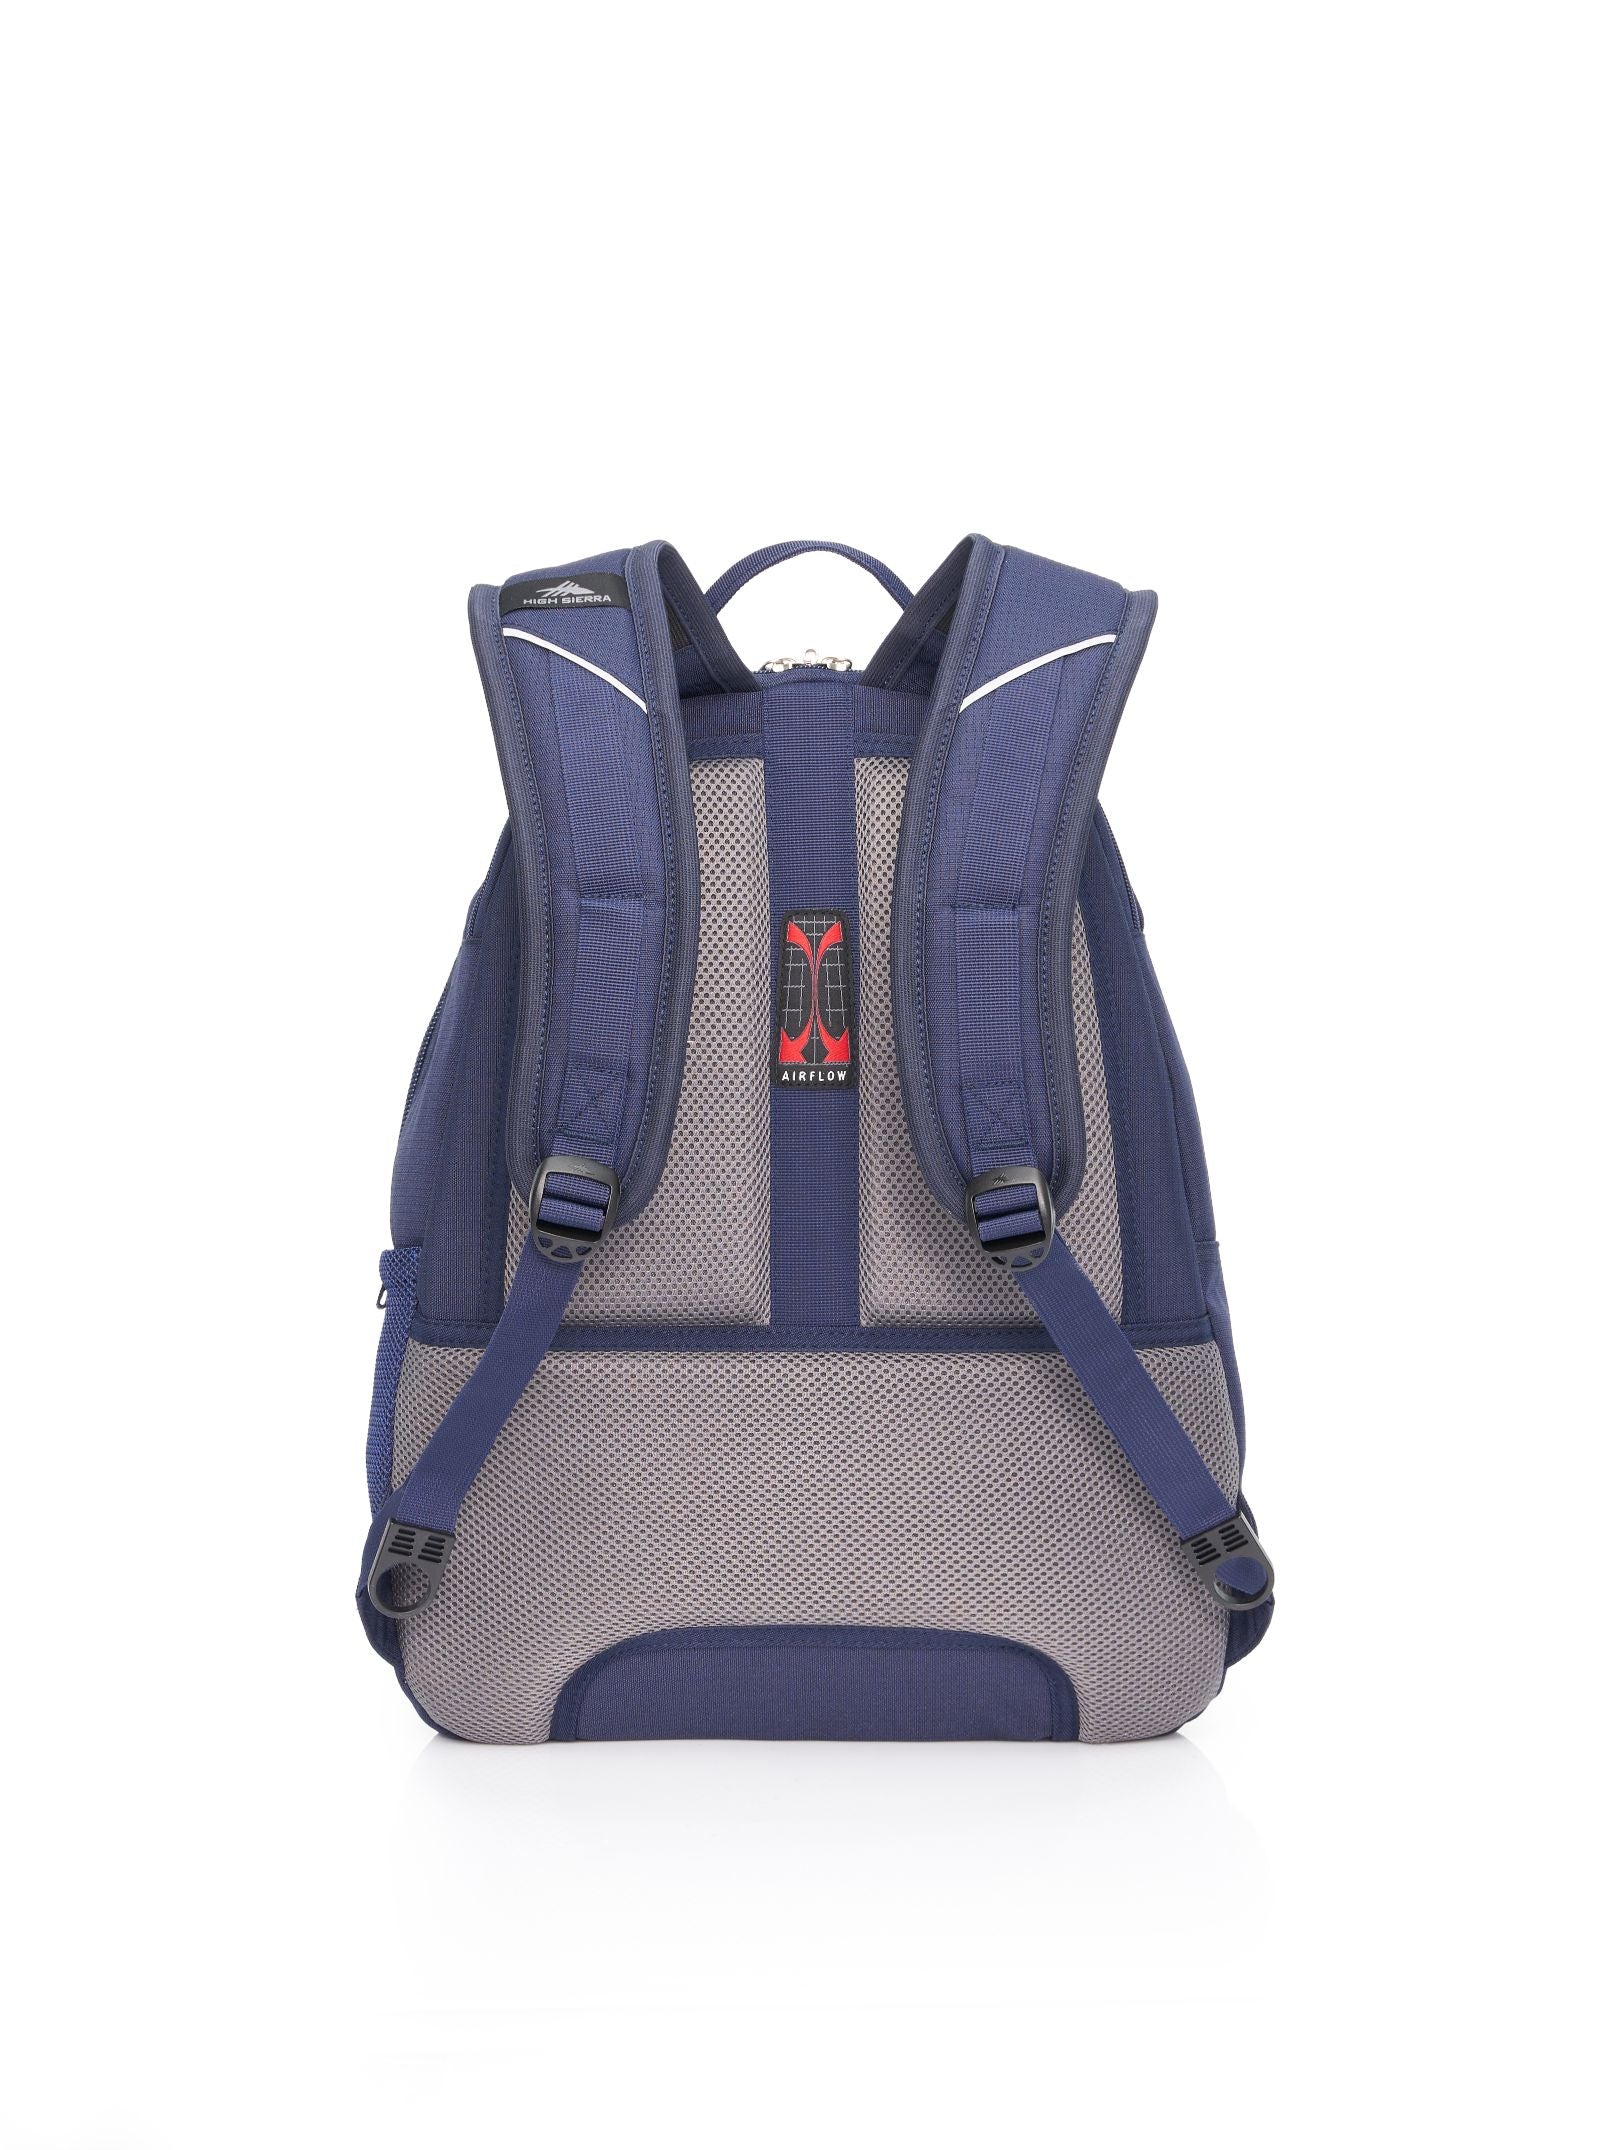 High Sierra - Academy 3.0 Backpack - Marine Blue-4